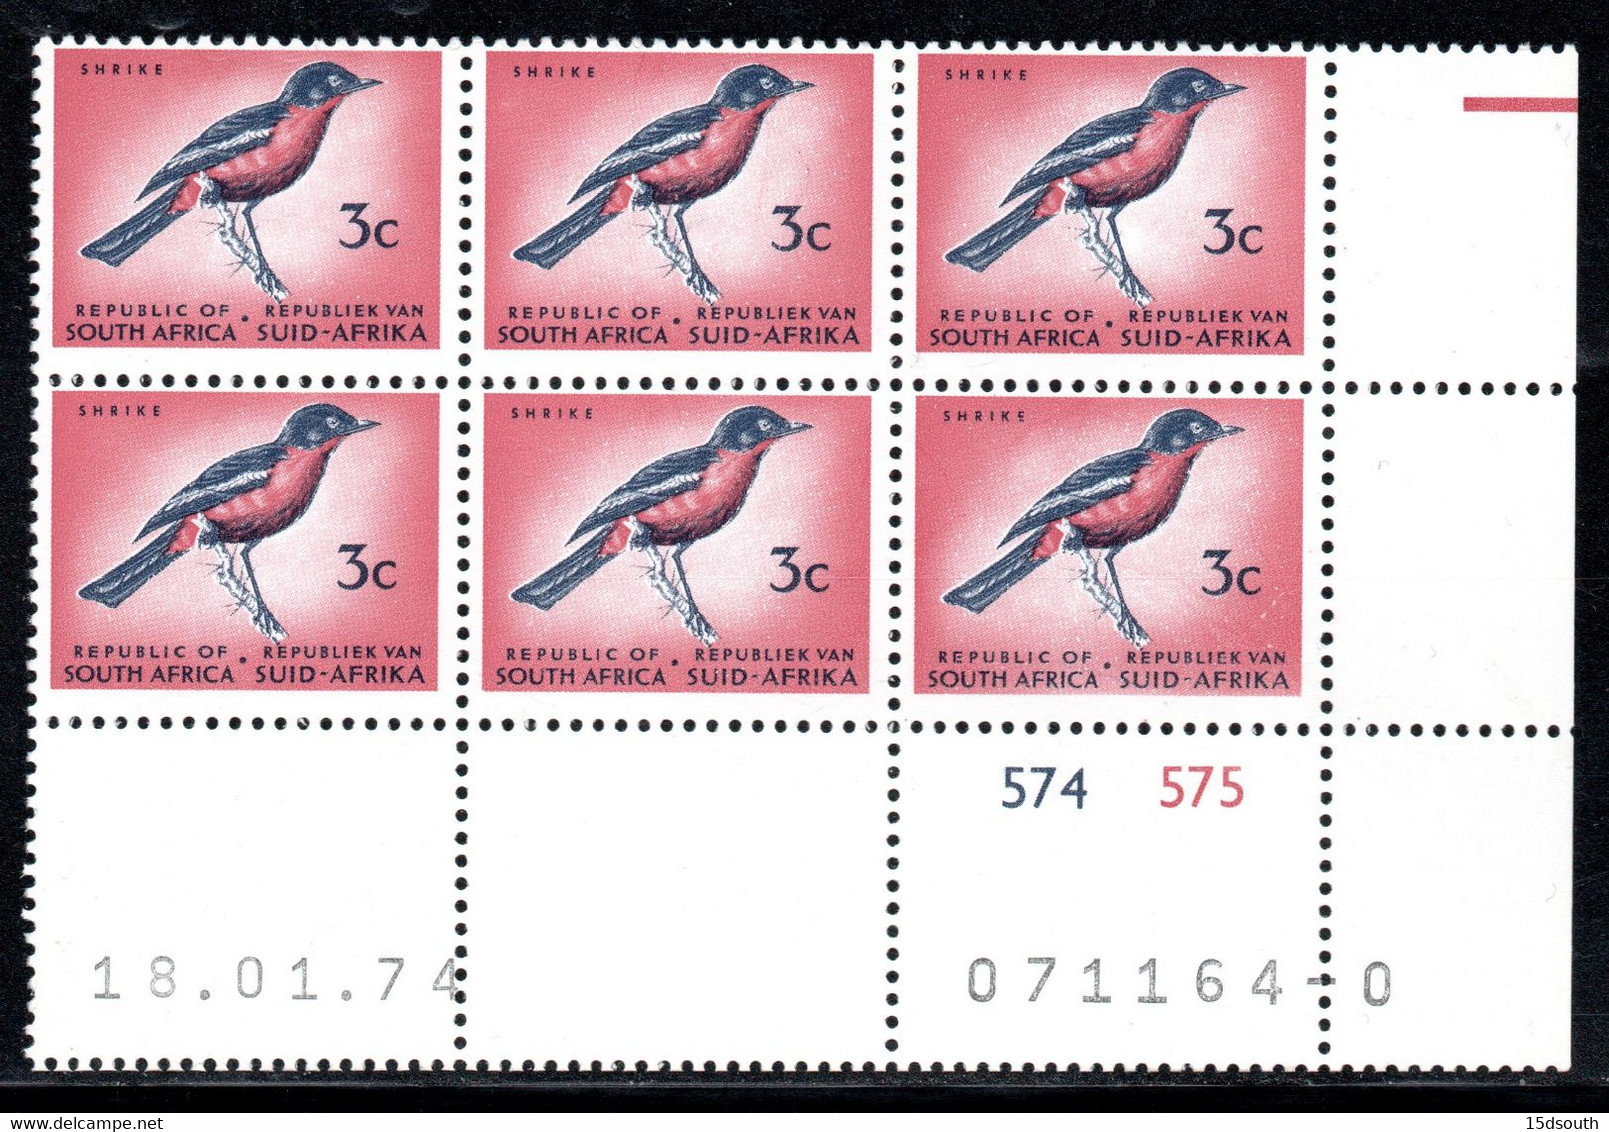 South Africa - 1972-74 Definitive 3c Shrike Control Block (18.01.74) (**) # SG 316a - Blocks & Sheetlets